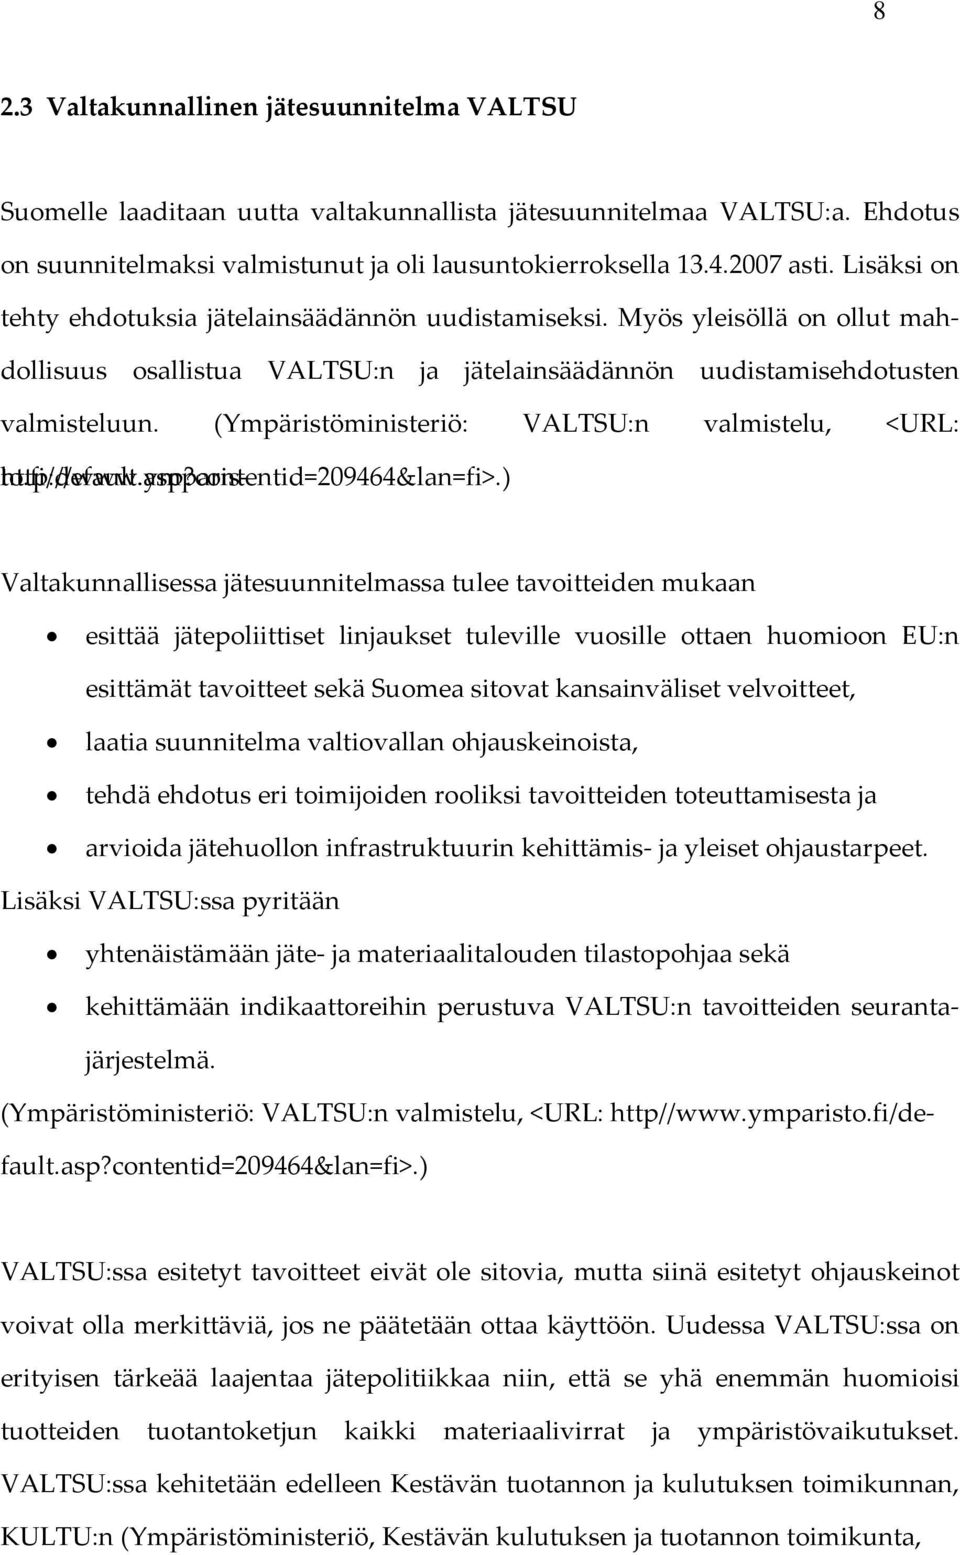 (Ympäristöministeriö: VALTSU:n valmistelu, <URL: http://www.ymparis- to.fi/default.asp?contentid=209464&lan=fi>.